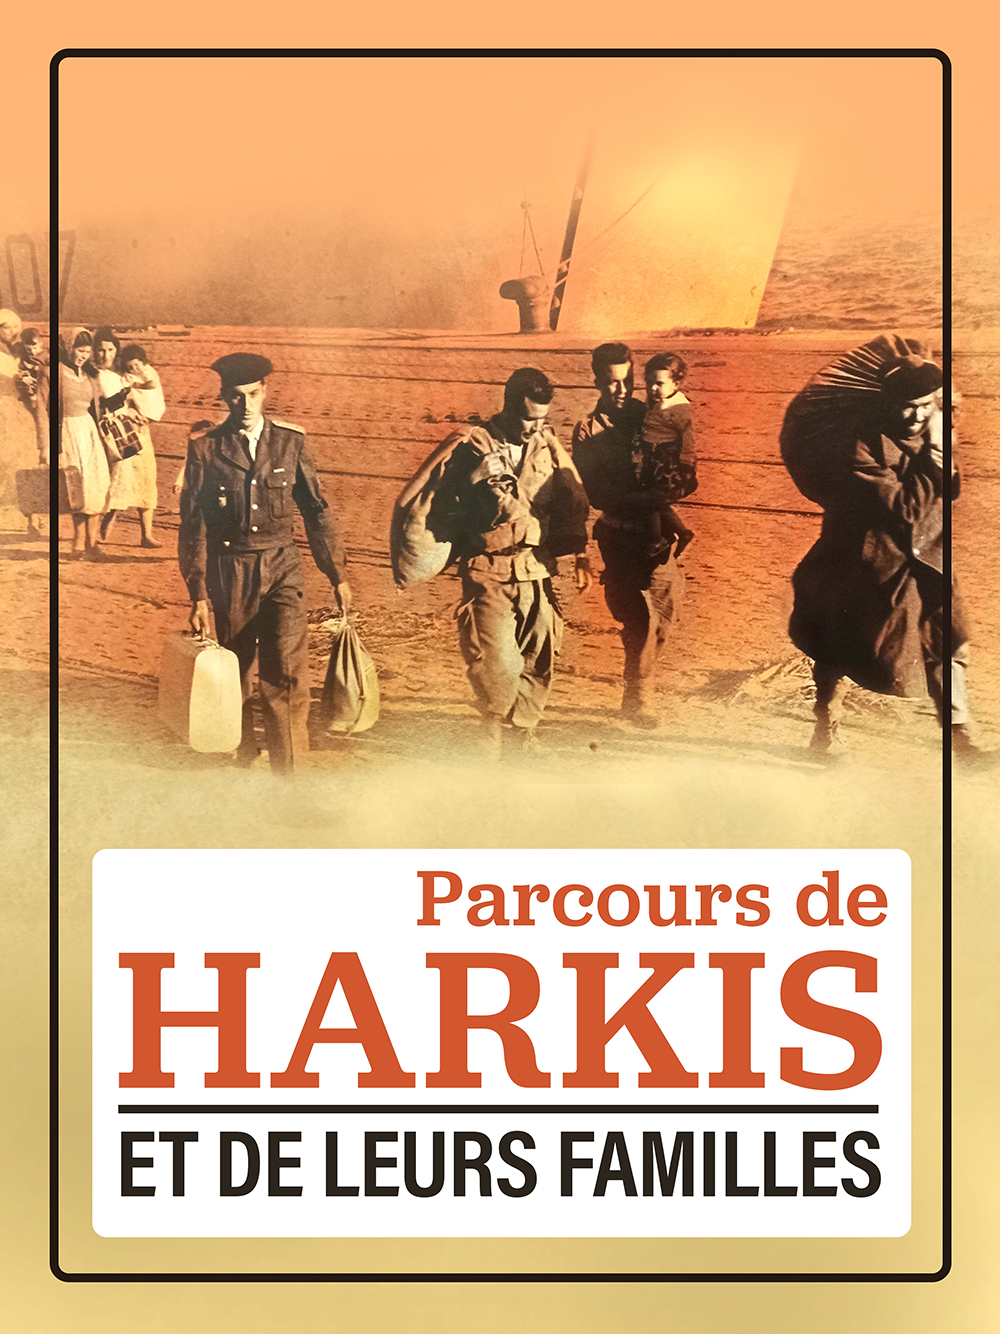 Exhibition | Harkis course